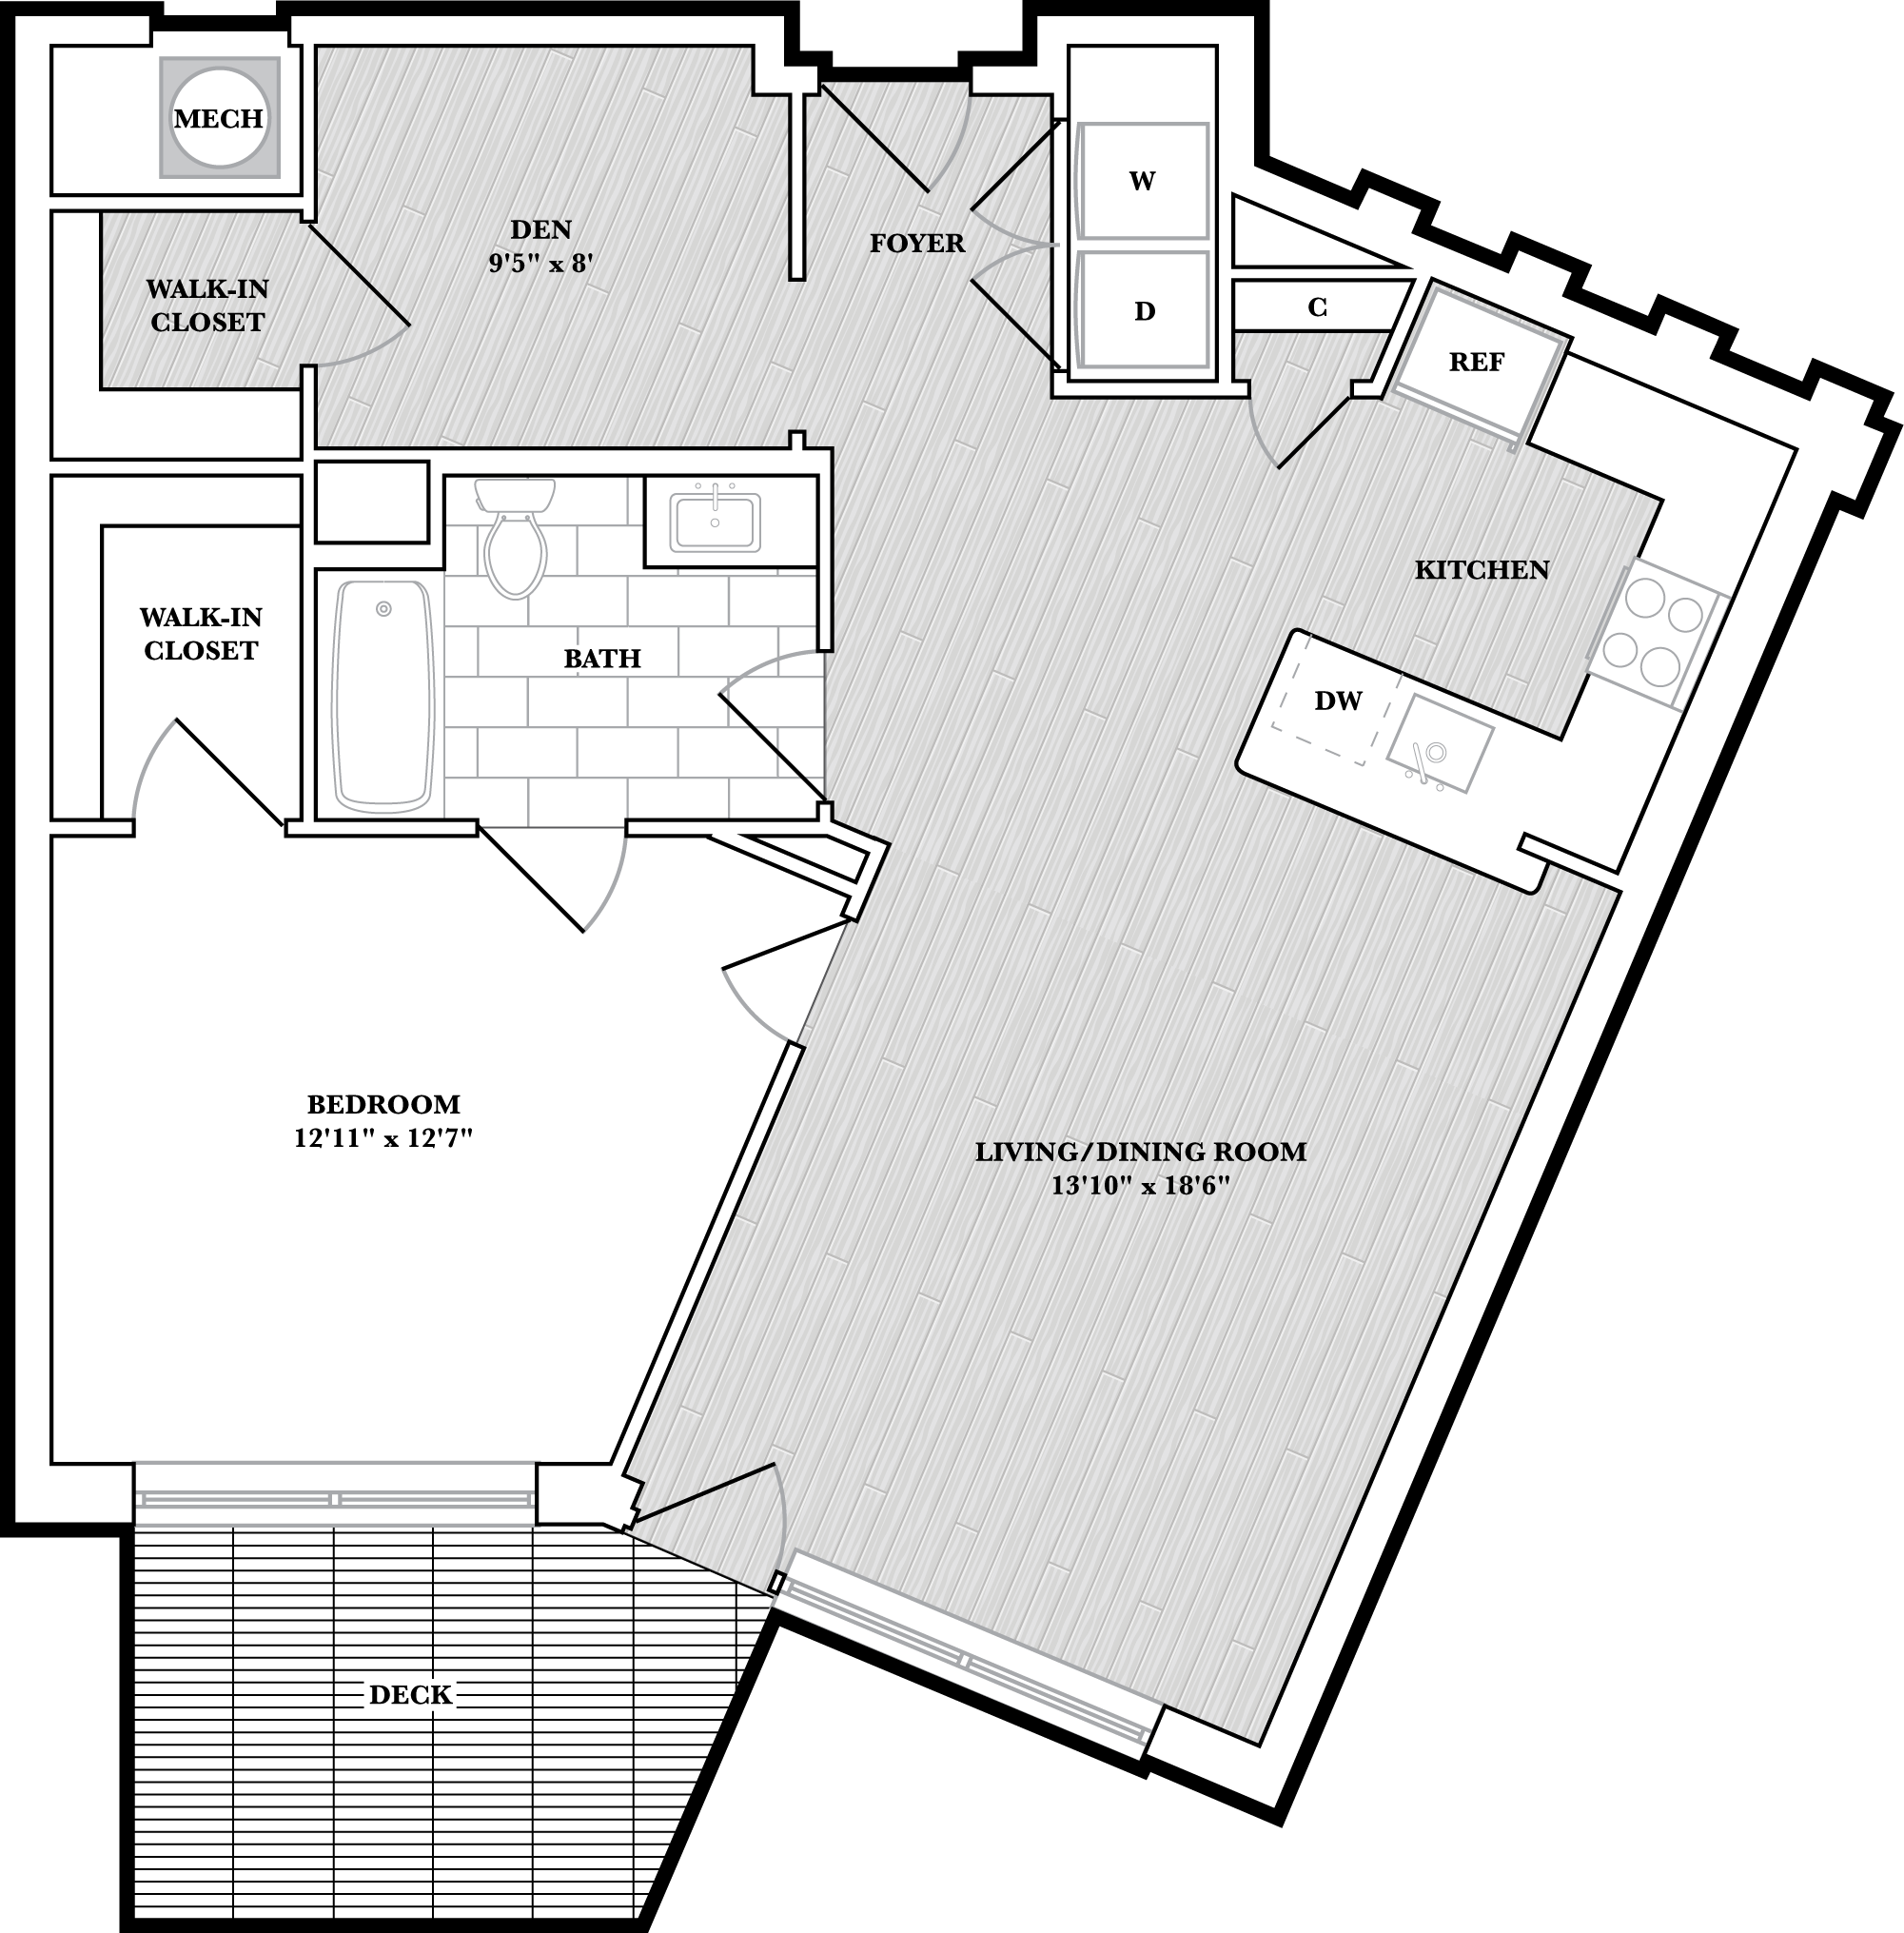 Floor Plan Image of Apartment Apt S210